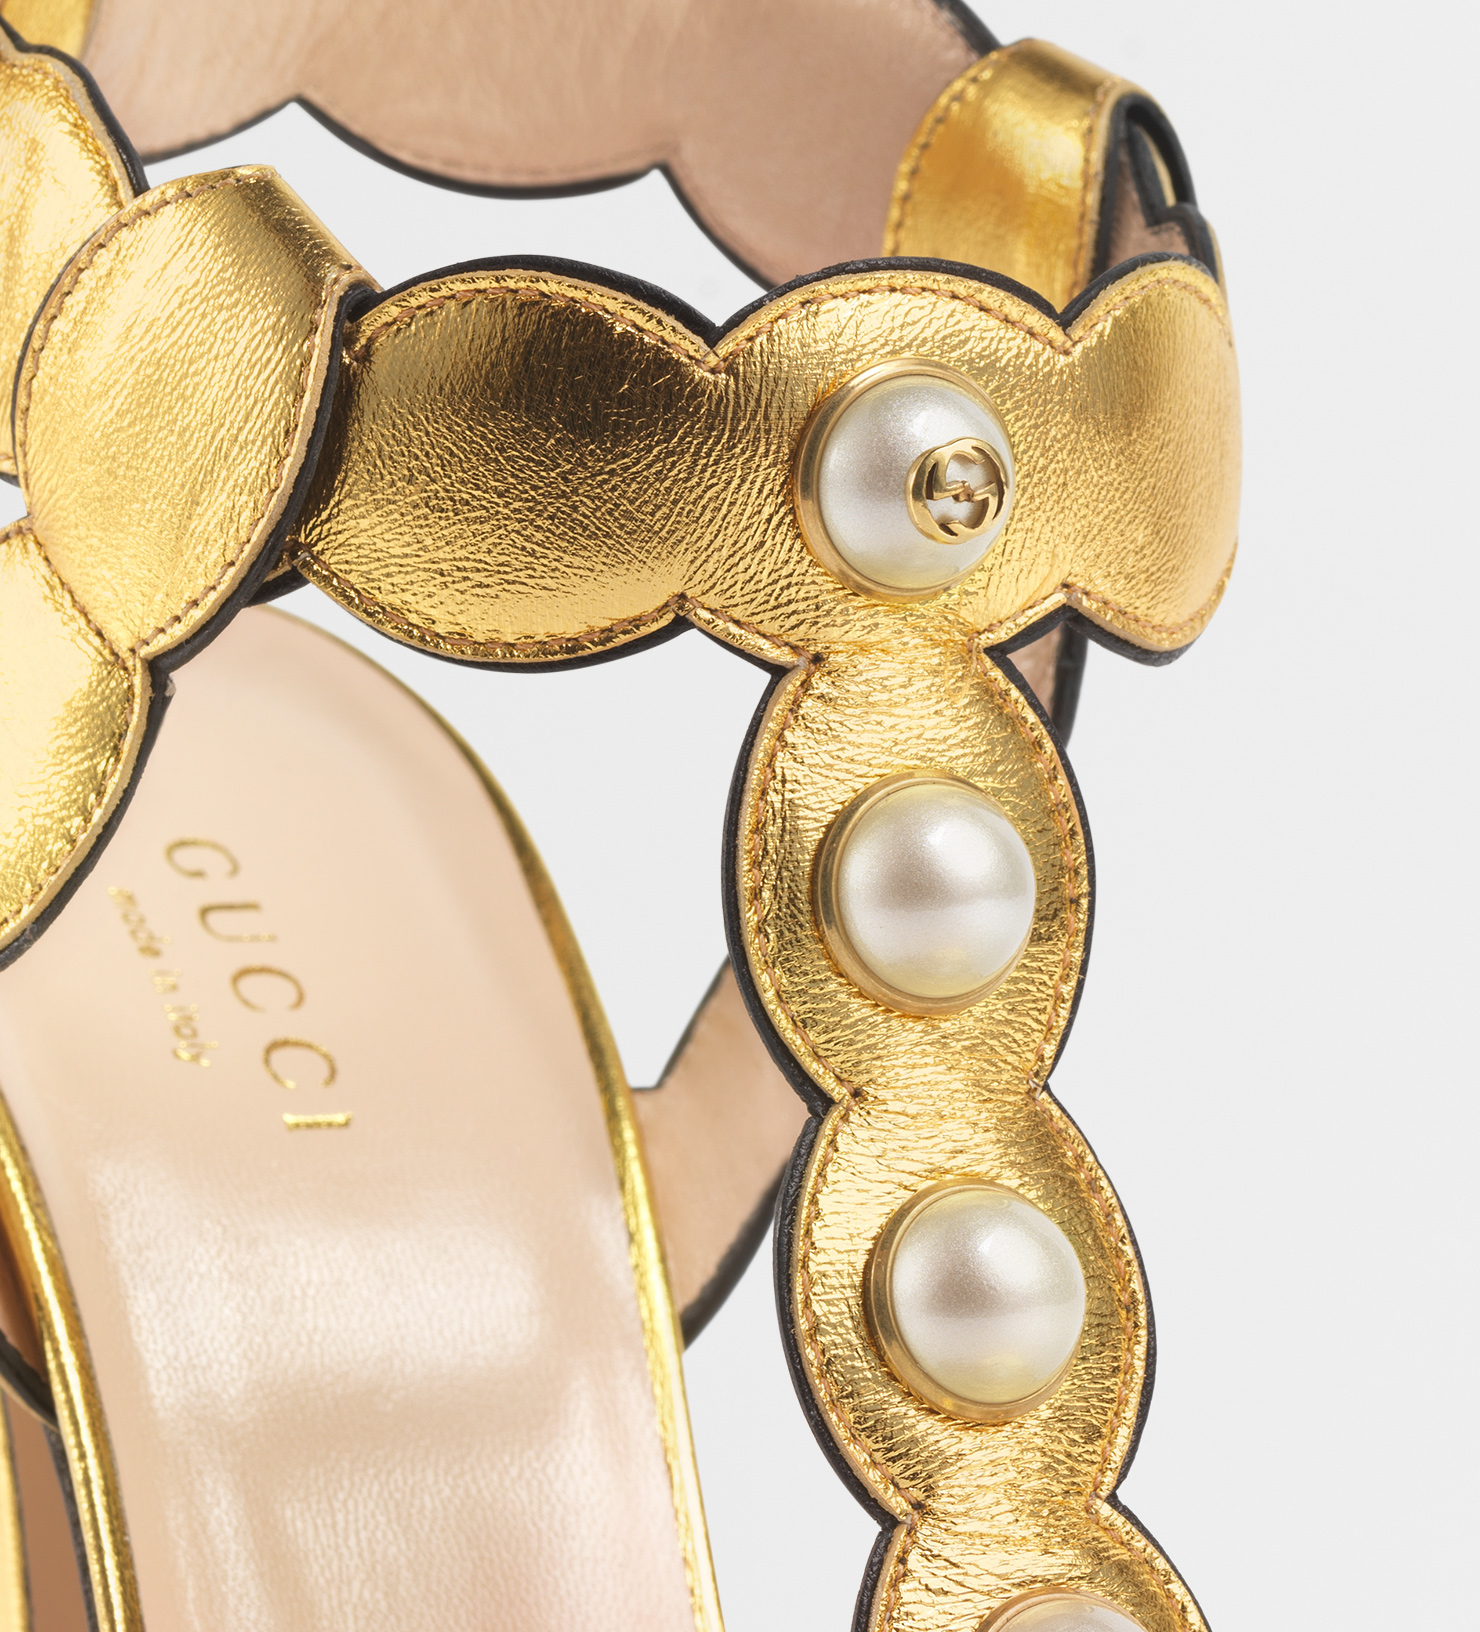 gucci gold pearl sandals